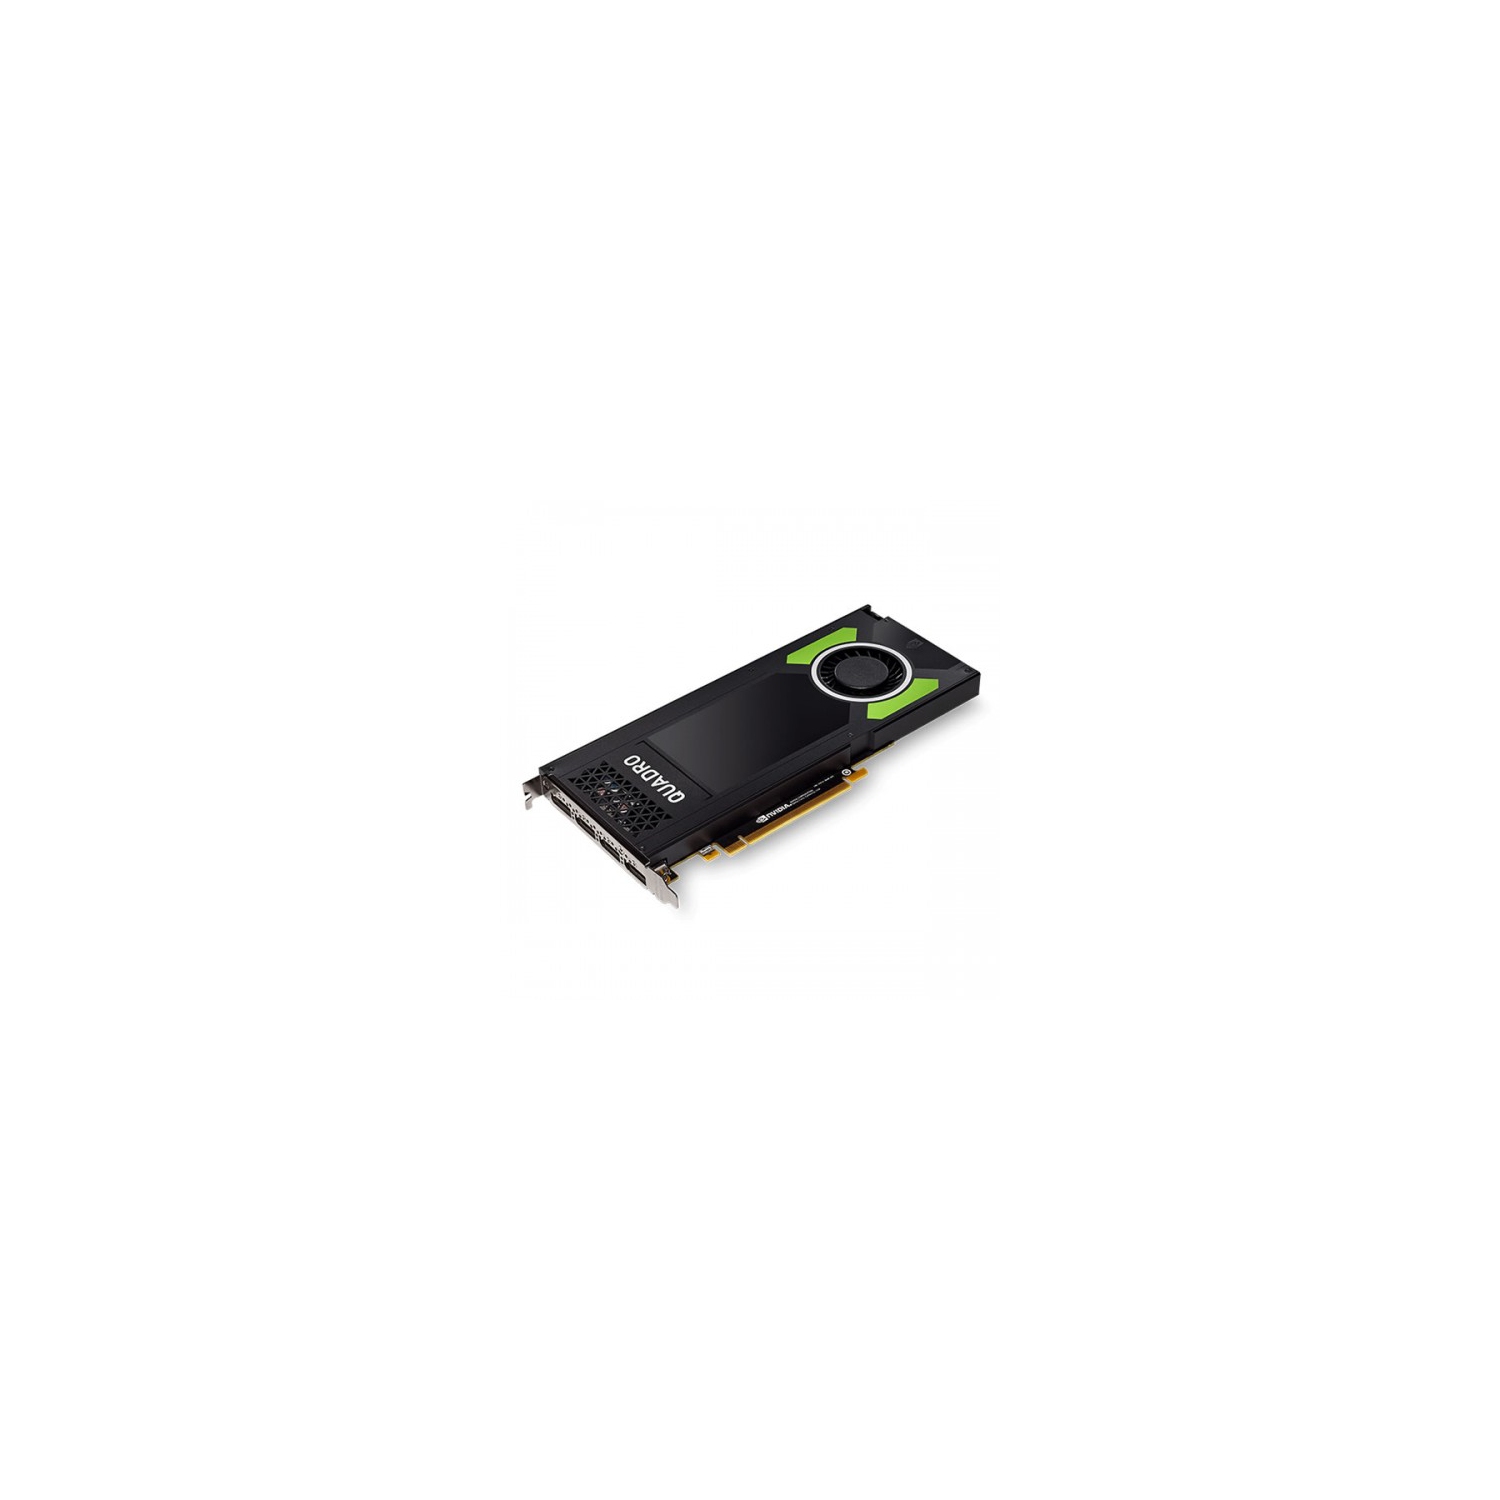 Nvidia Quadro P4000 8GB GDDR5 PCIe-x16 FH Graphics Card (4x DisplayPort), pulled (USED)